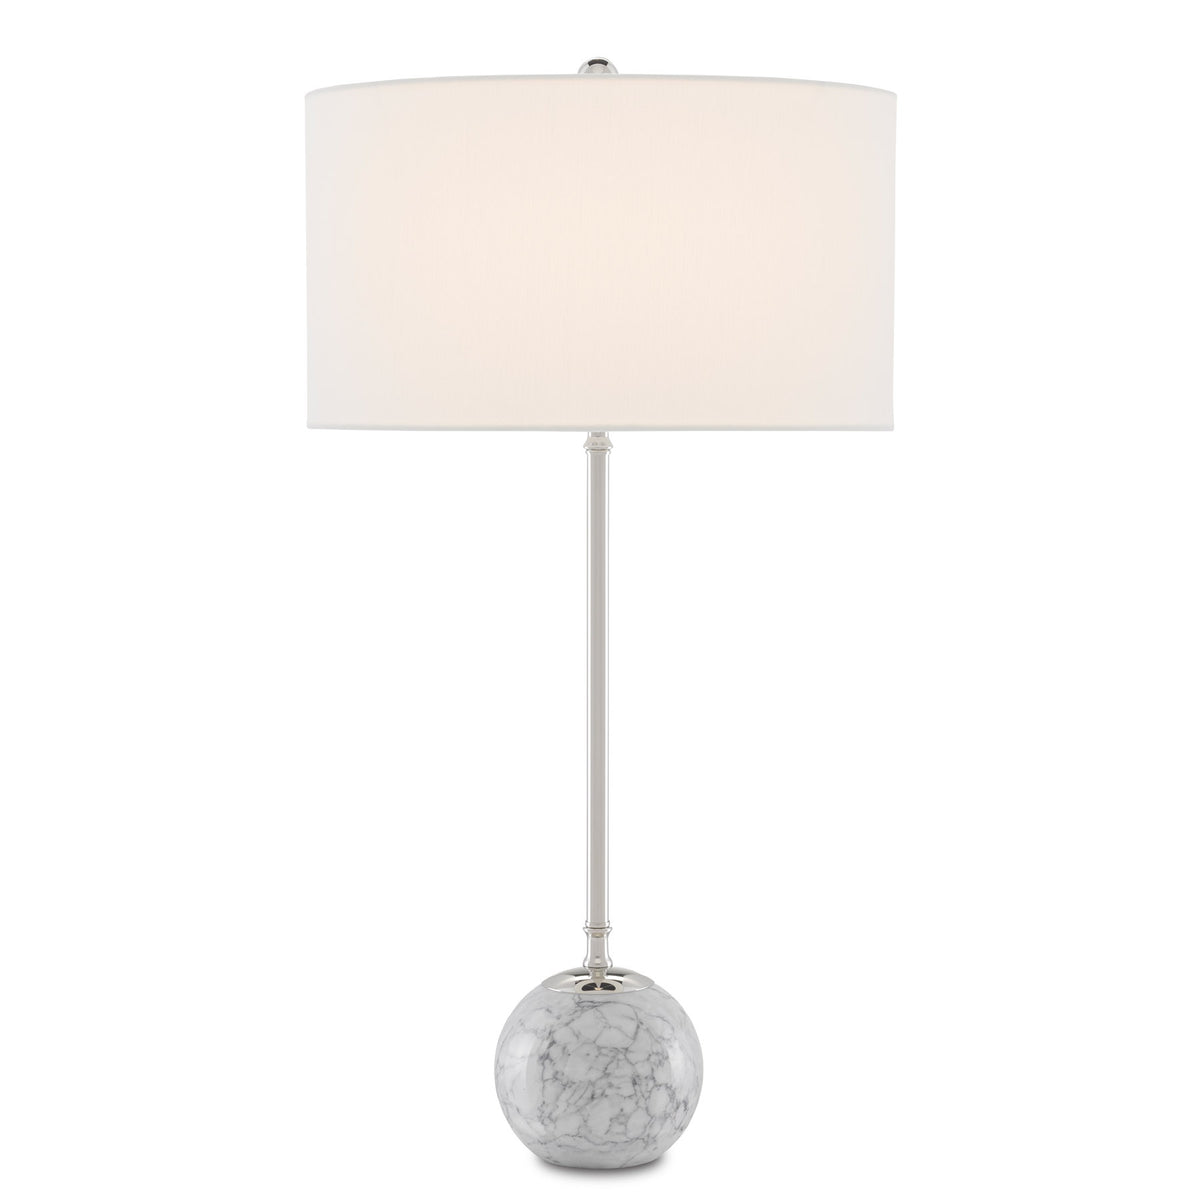 Villette White Table Lamp